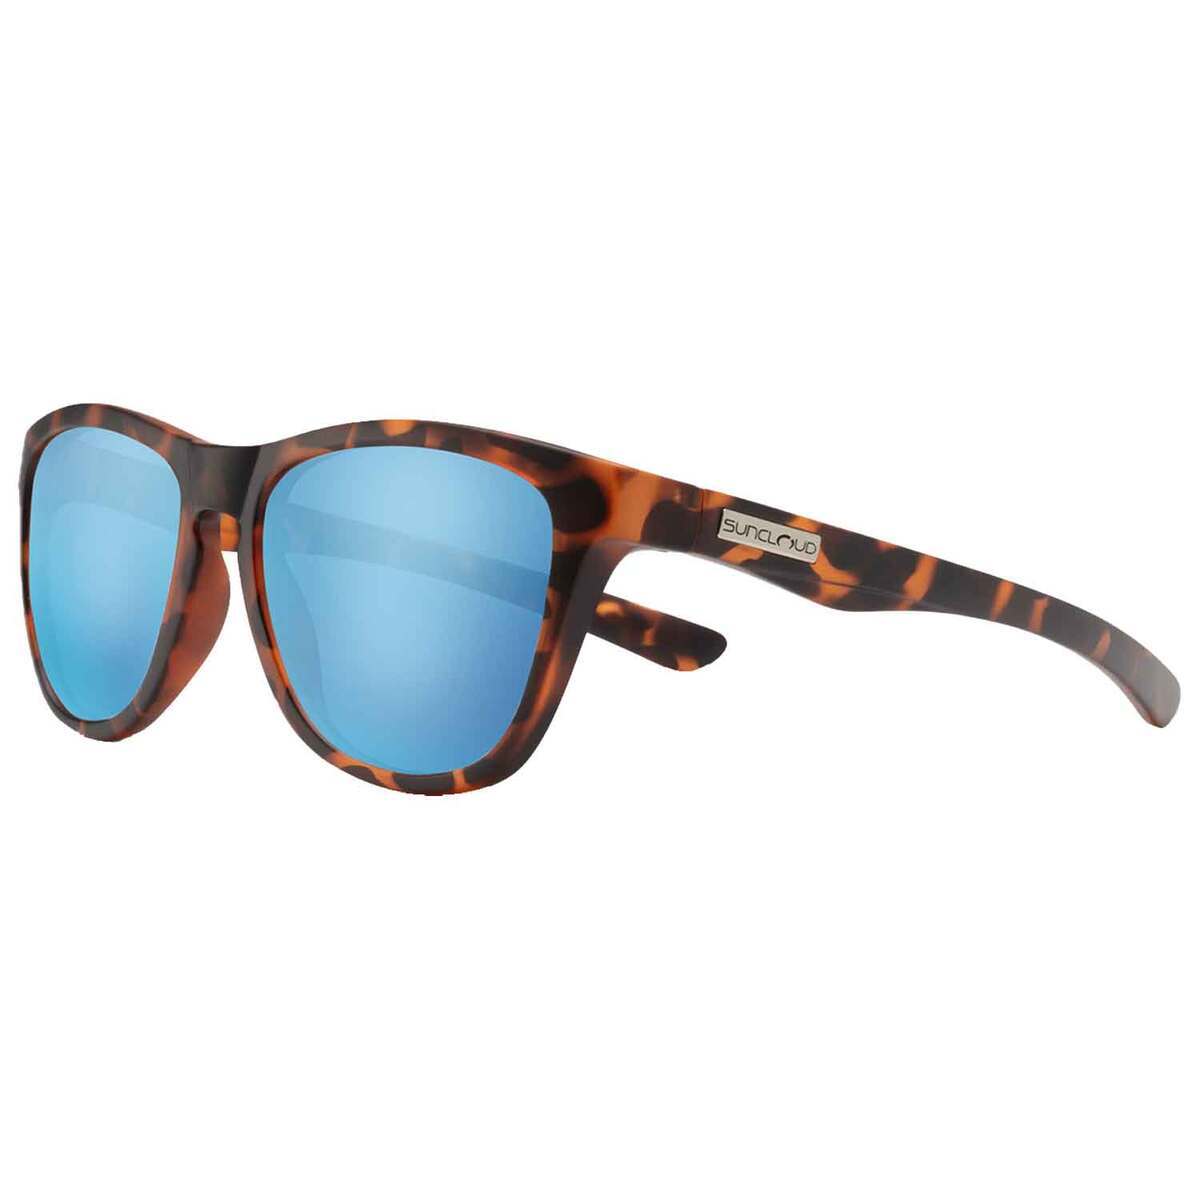 Suncloud Topsail Polarized Sunglasses - Matte Tortoise/Aqua Mirror ...